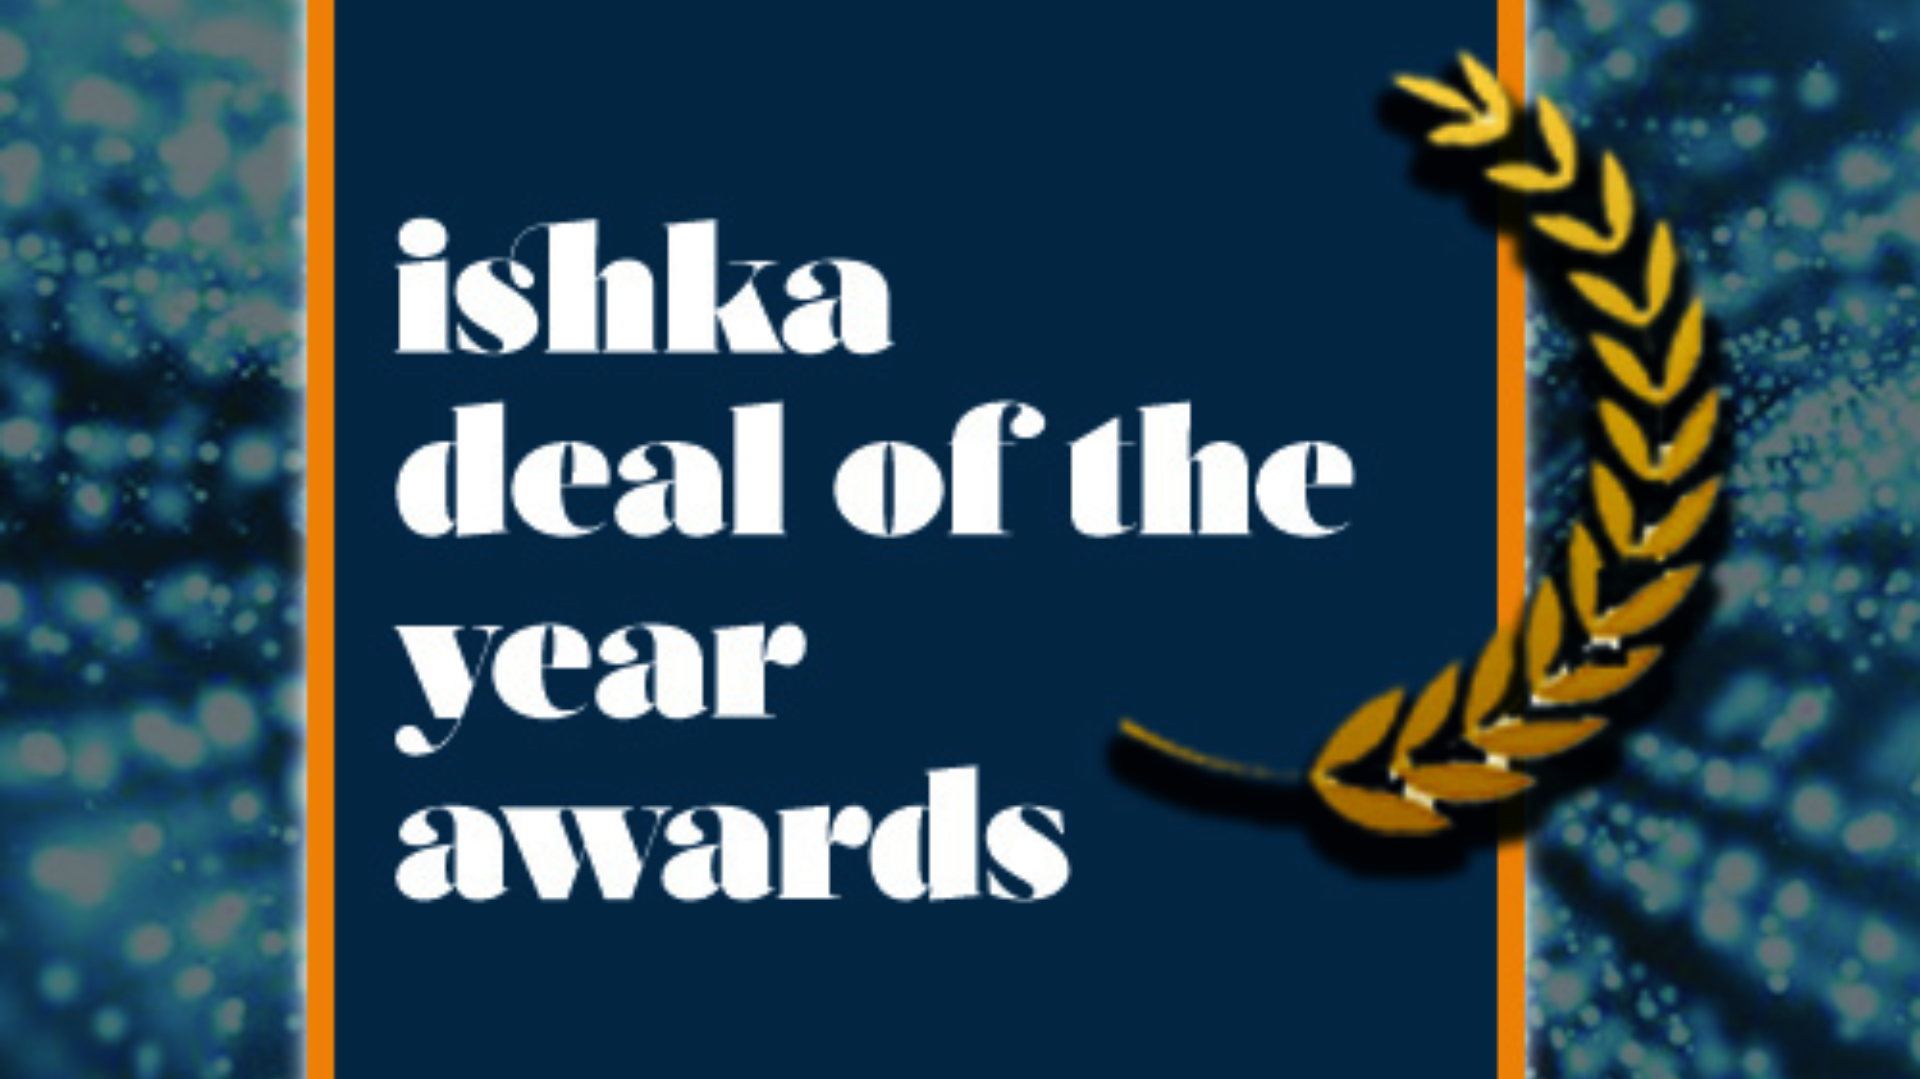 Ishka - Deal Of The Year Awards